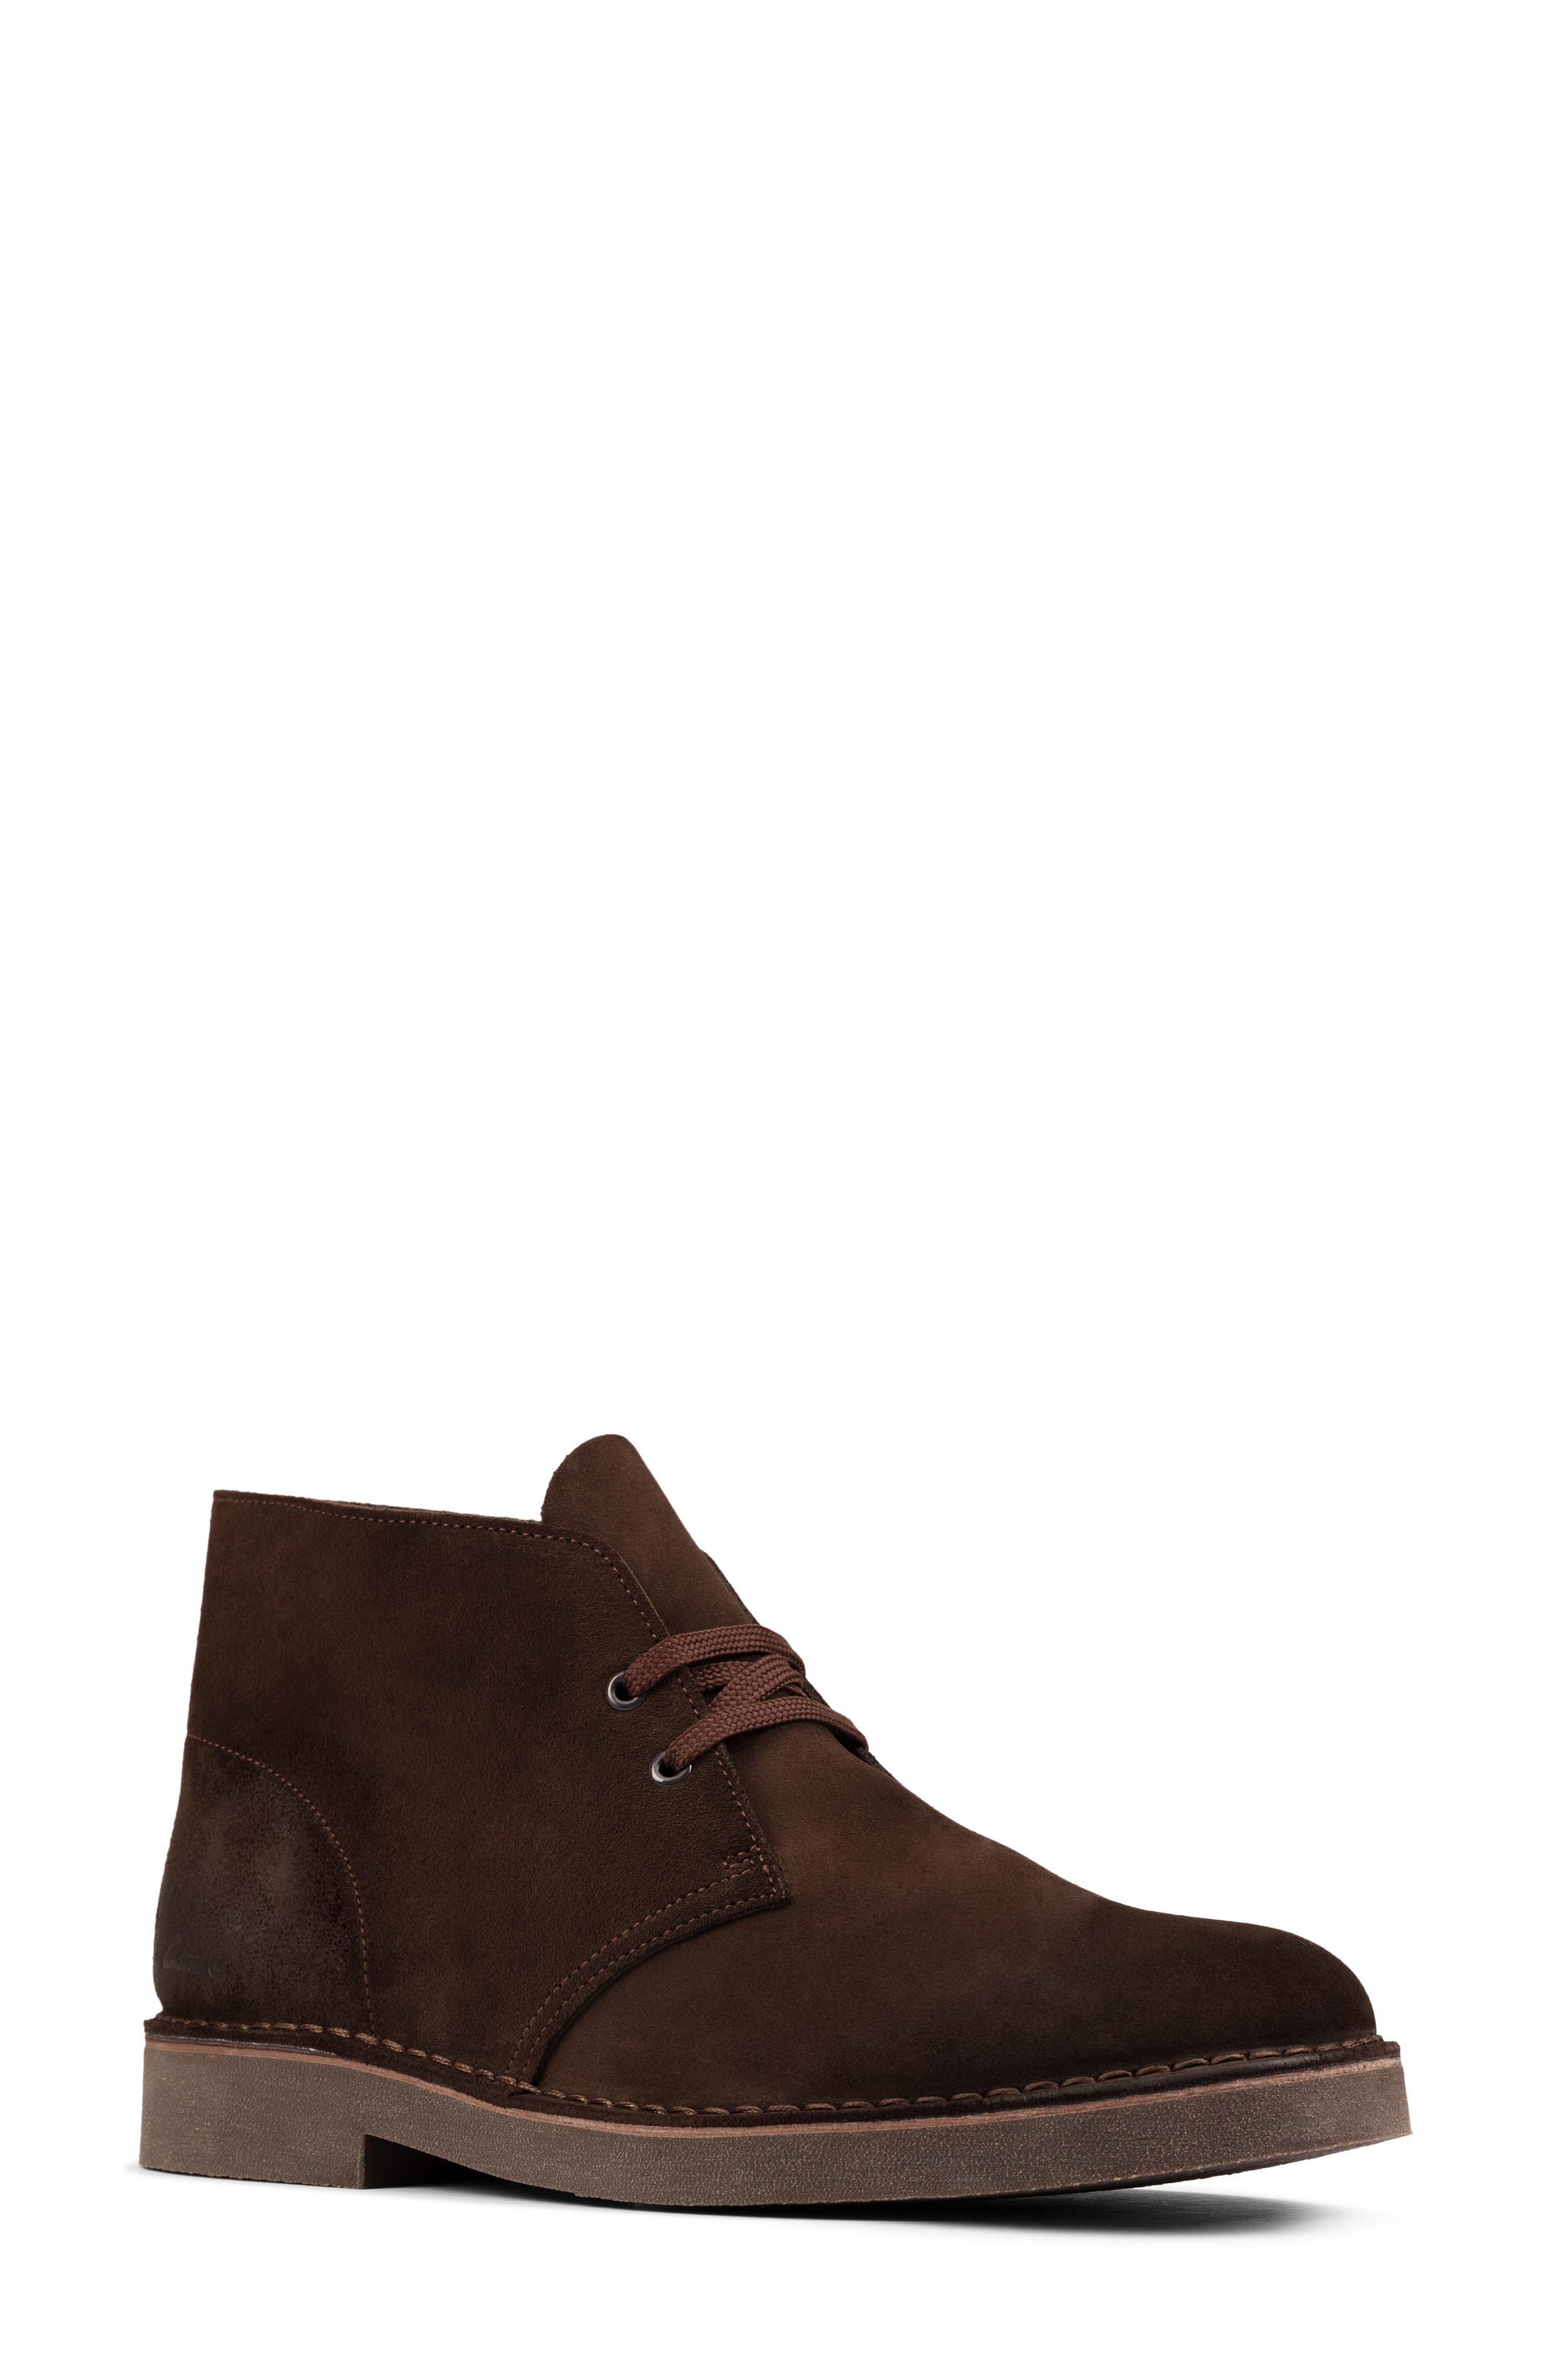 Buy > clarks mens boots brown > in stock